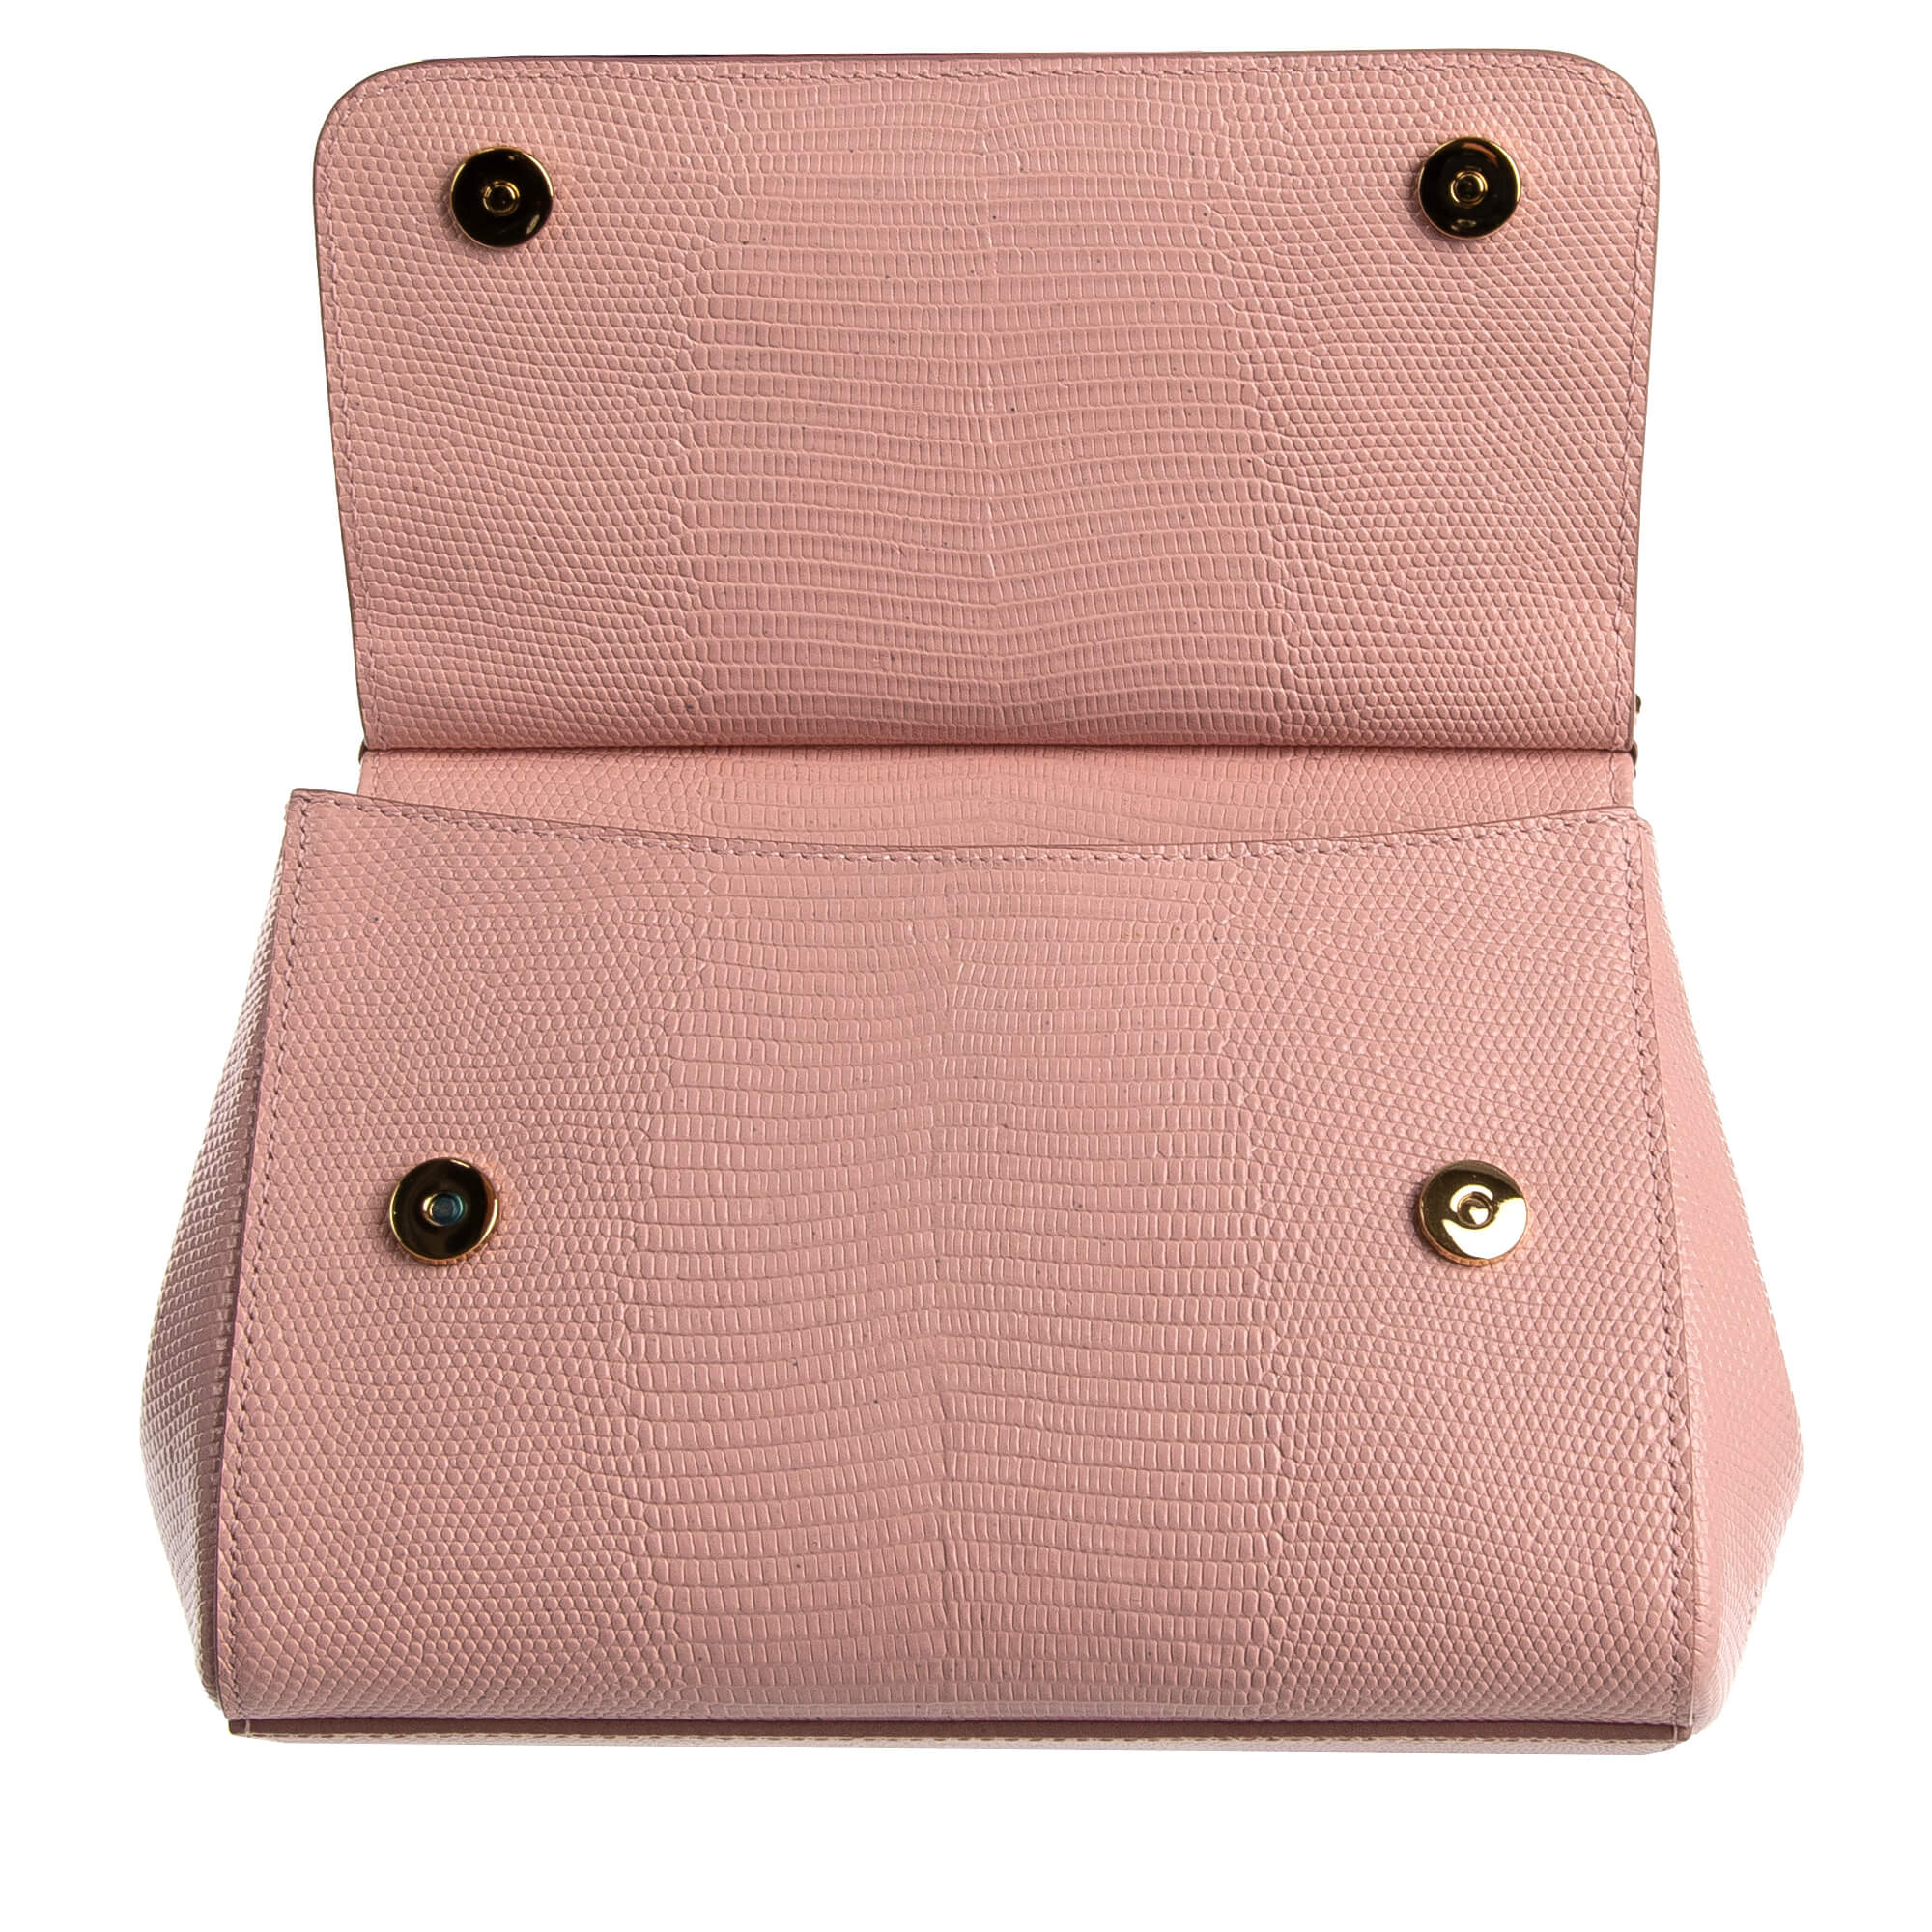 Dolce & Gabbana Small Sicily Handbag In Iguana Print Calfskin With Dg Logo  Crystals - Pink